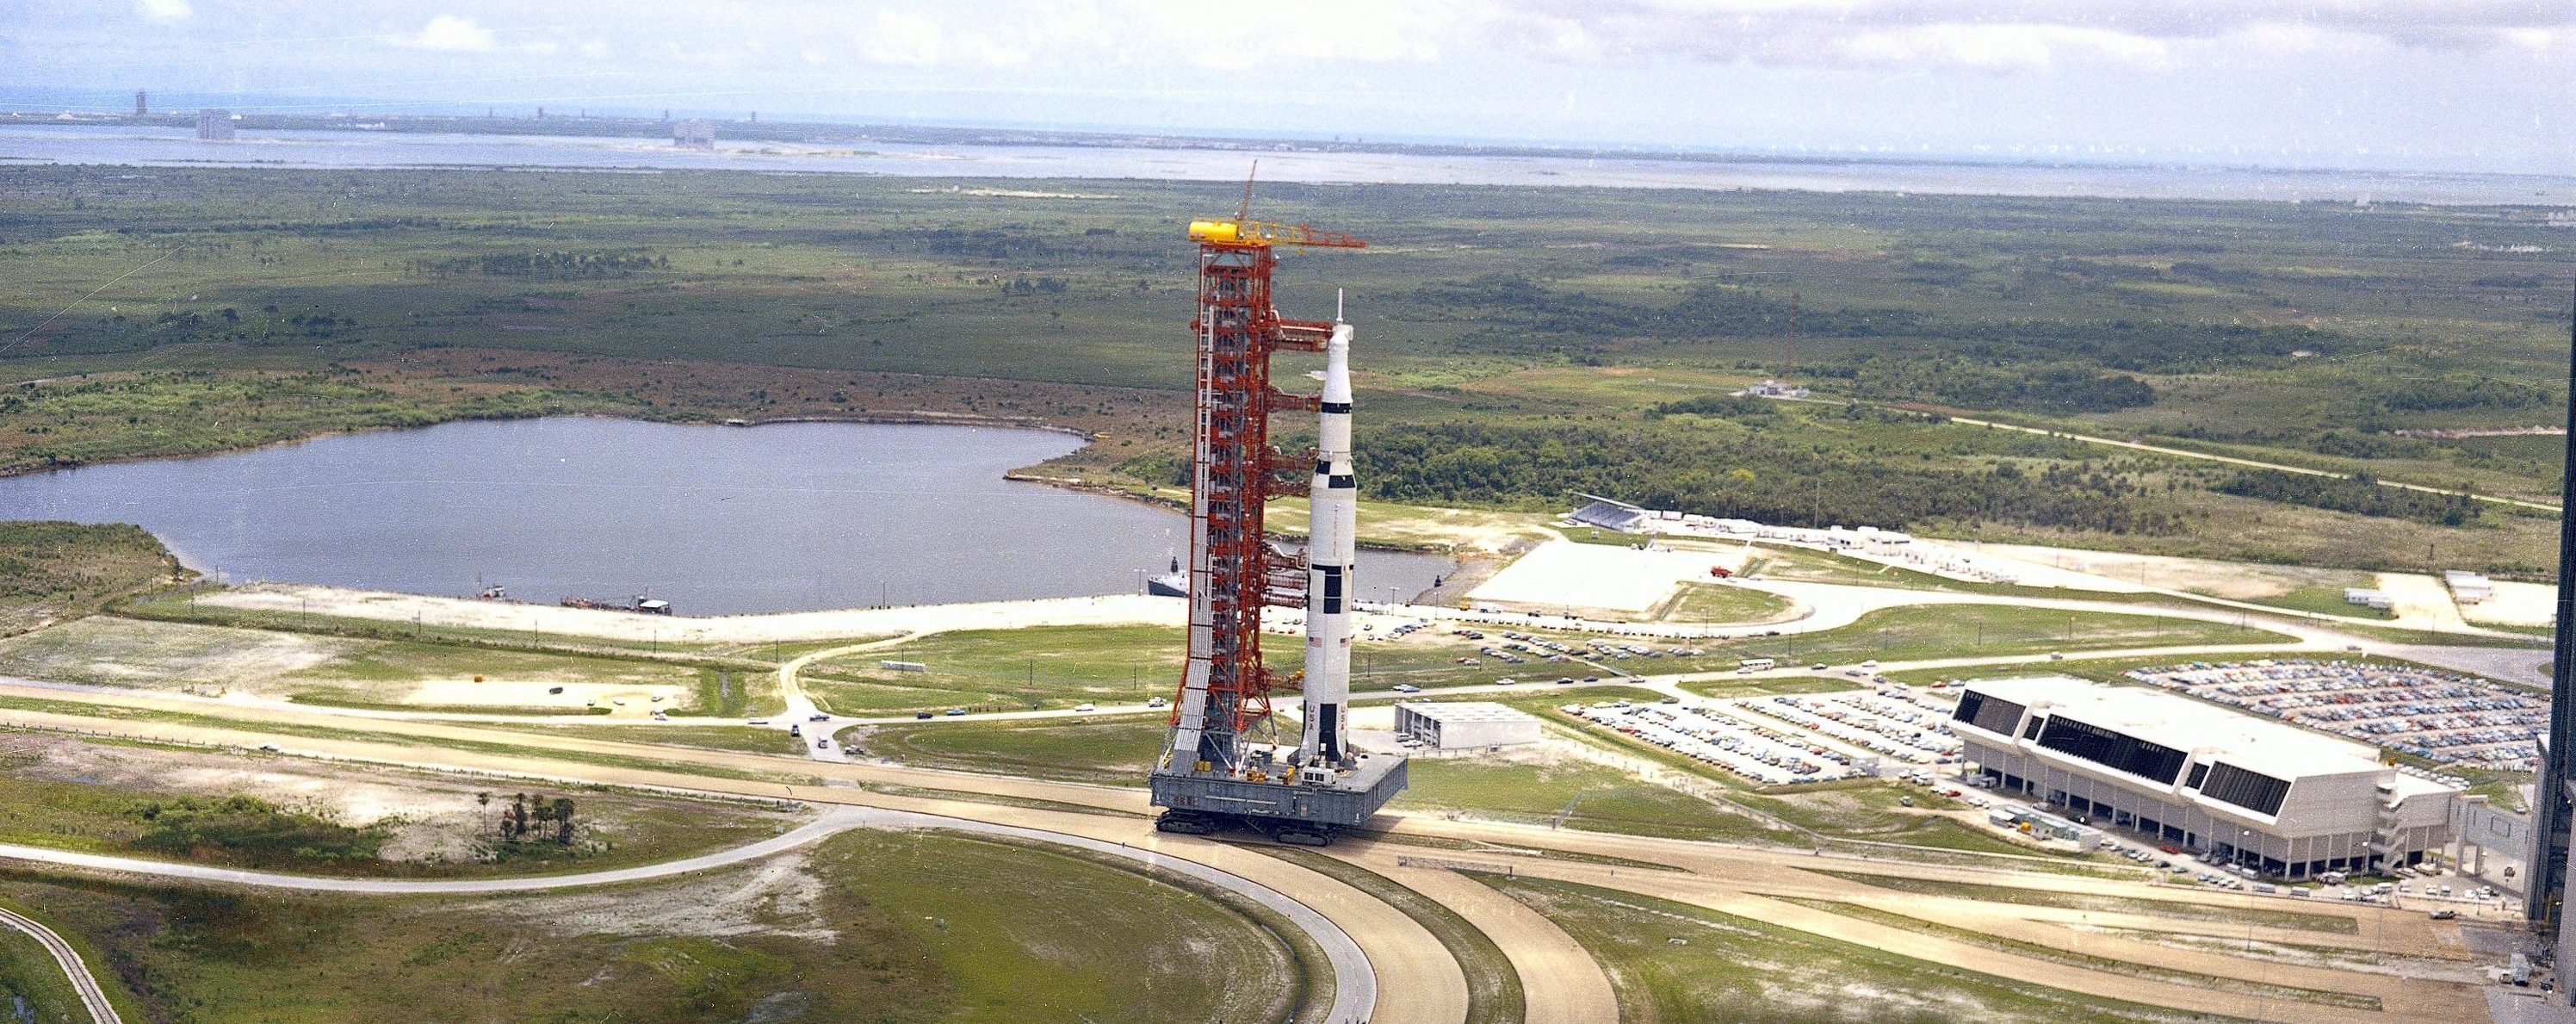 apollo 11 rocket launch pad